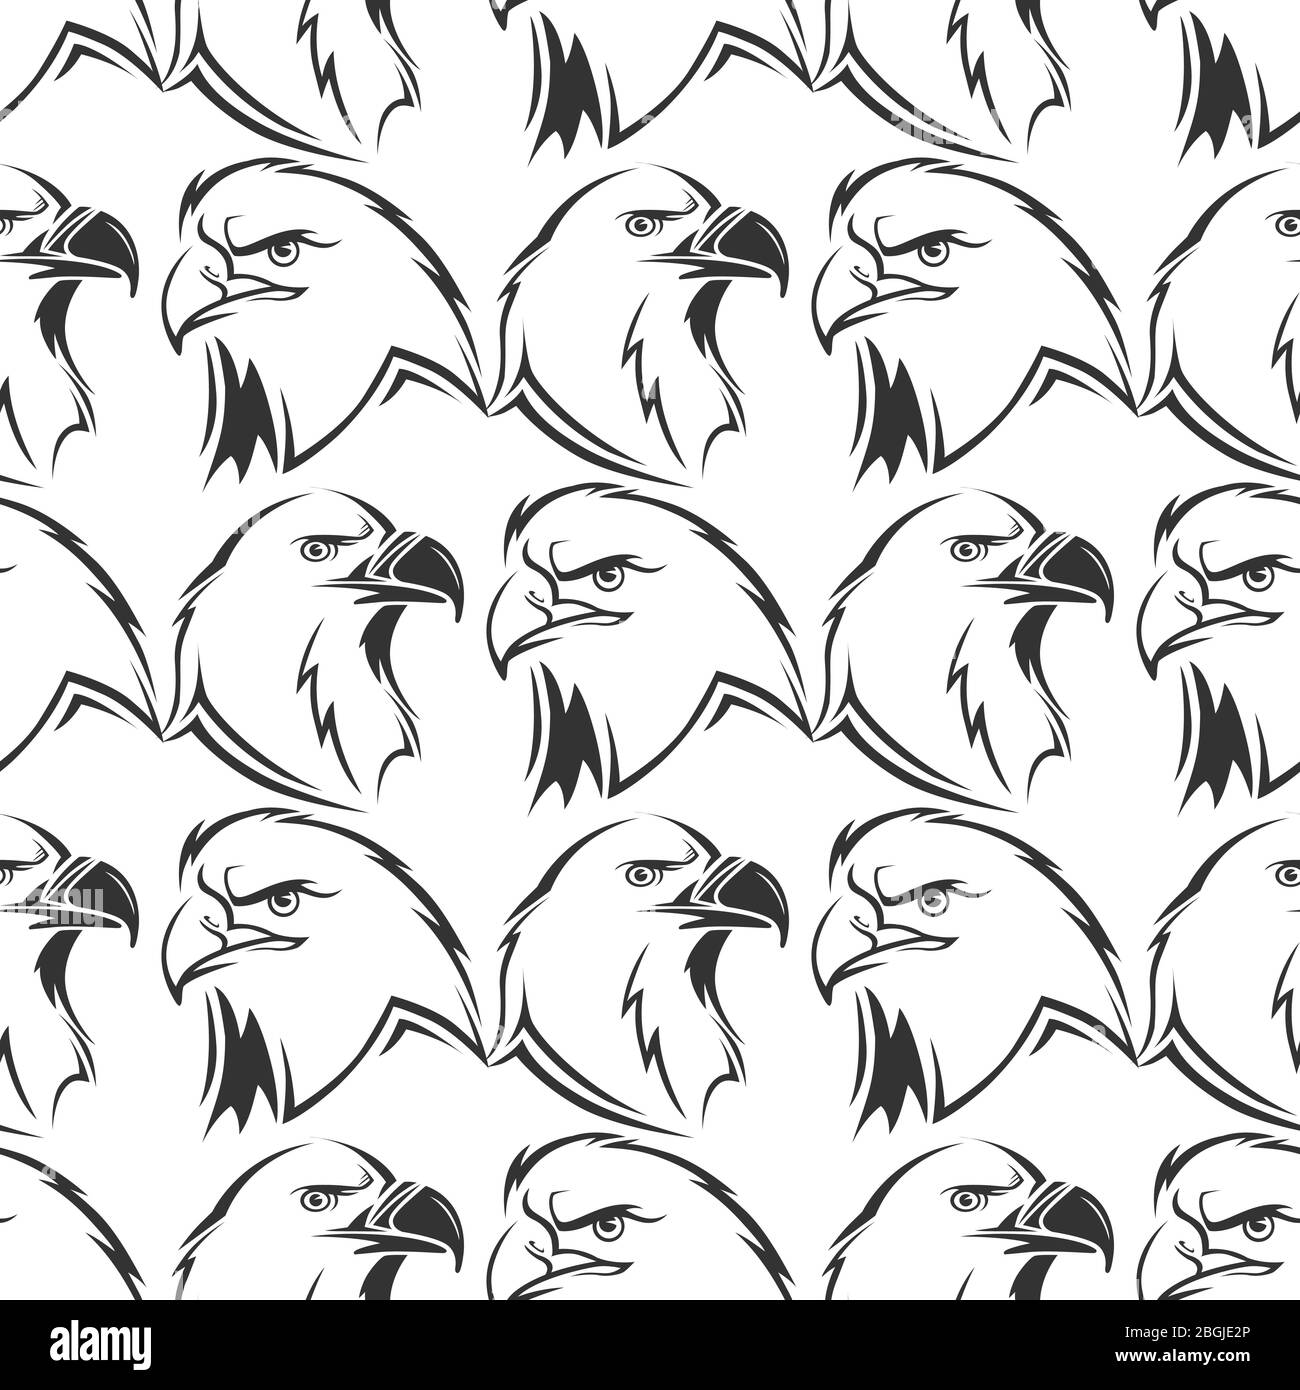 Grey proud eagles bird vector seamless pattern background design illustration Stock Vector